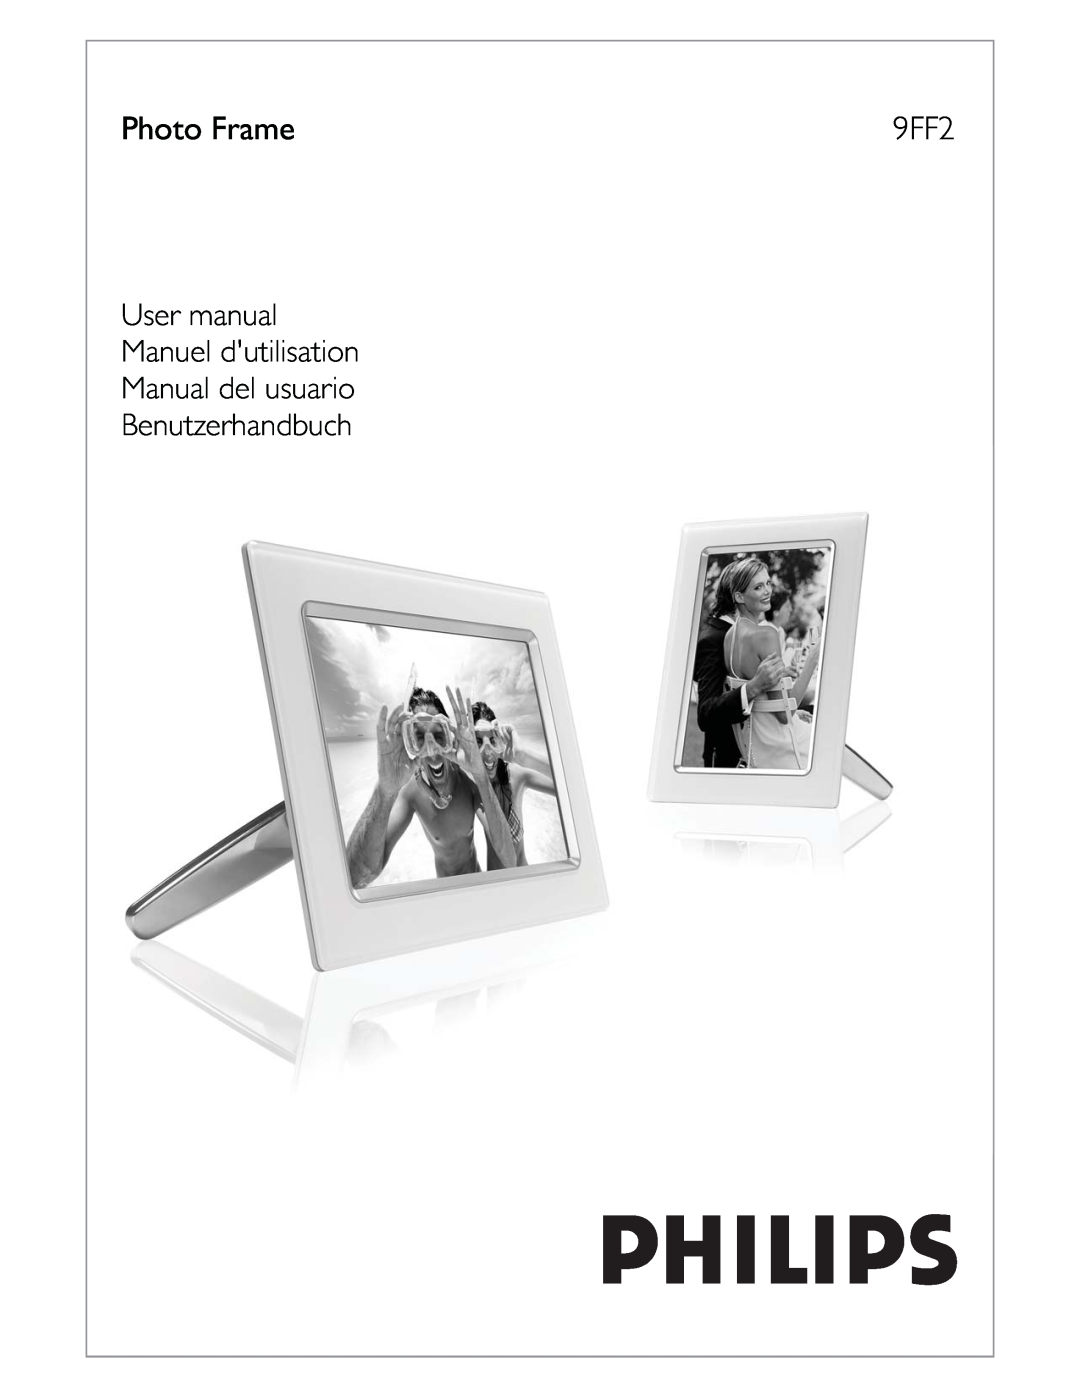 Philips 9FF2 user manual Photo Frame, User manual Manuel dutilisation Manual del usuario Benutzerhandbuch 